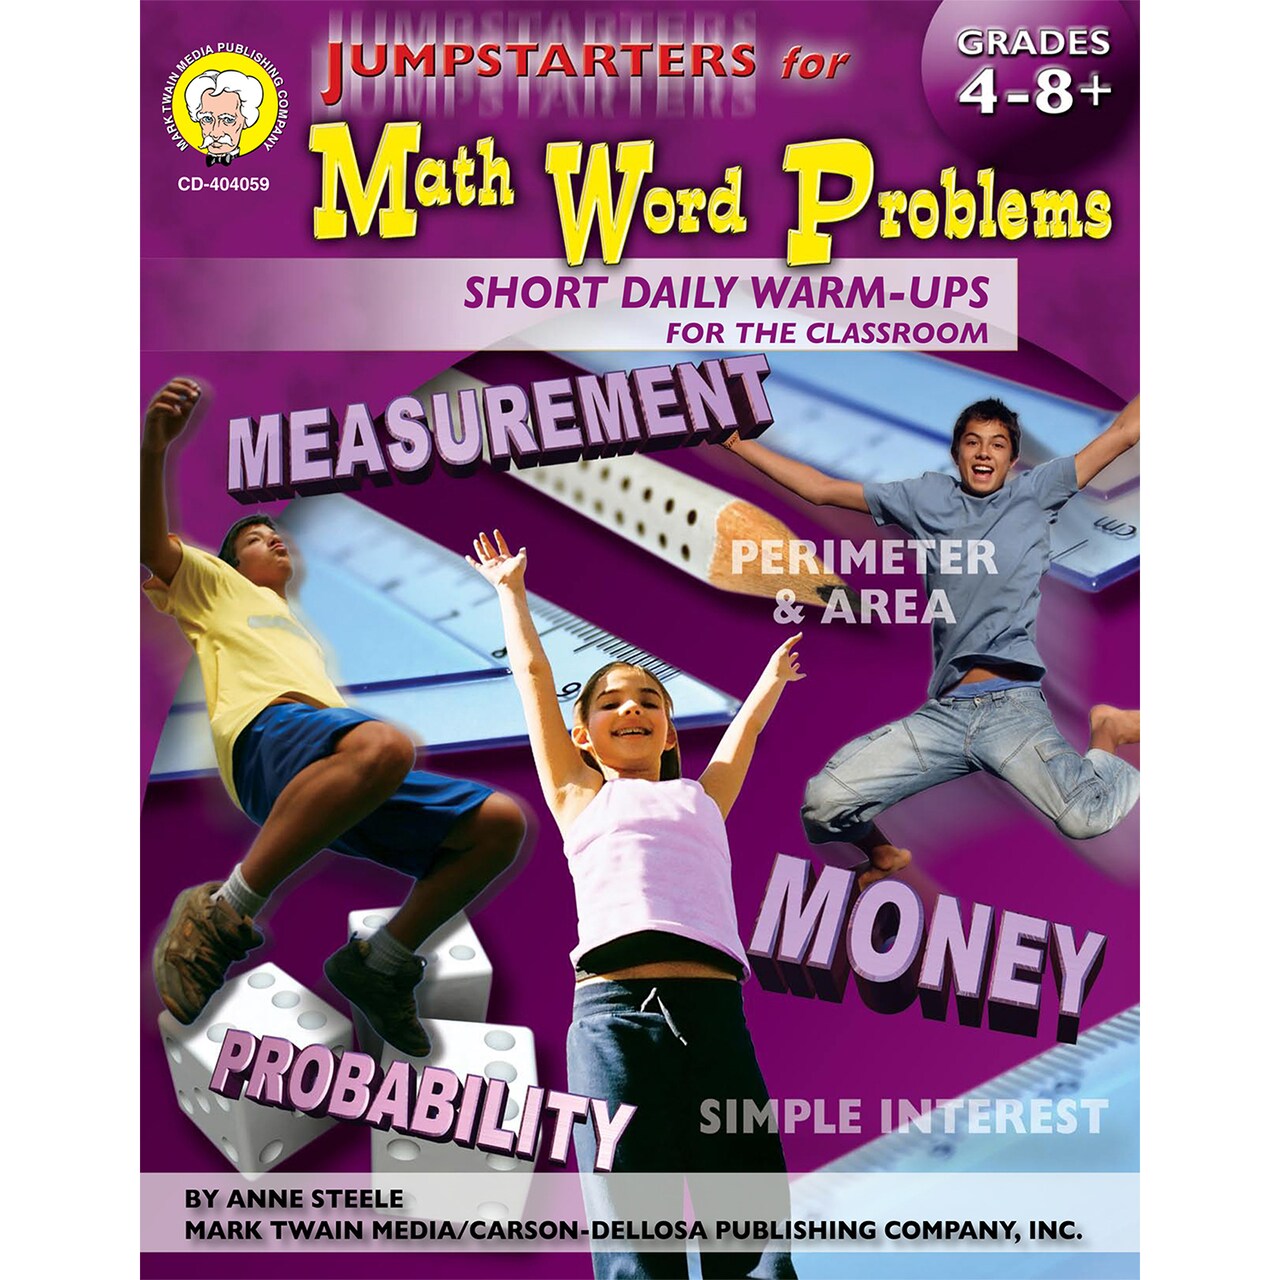 Mark Twain - Jumpstarters for Math Word Problems, Grades 4 - 8